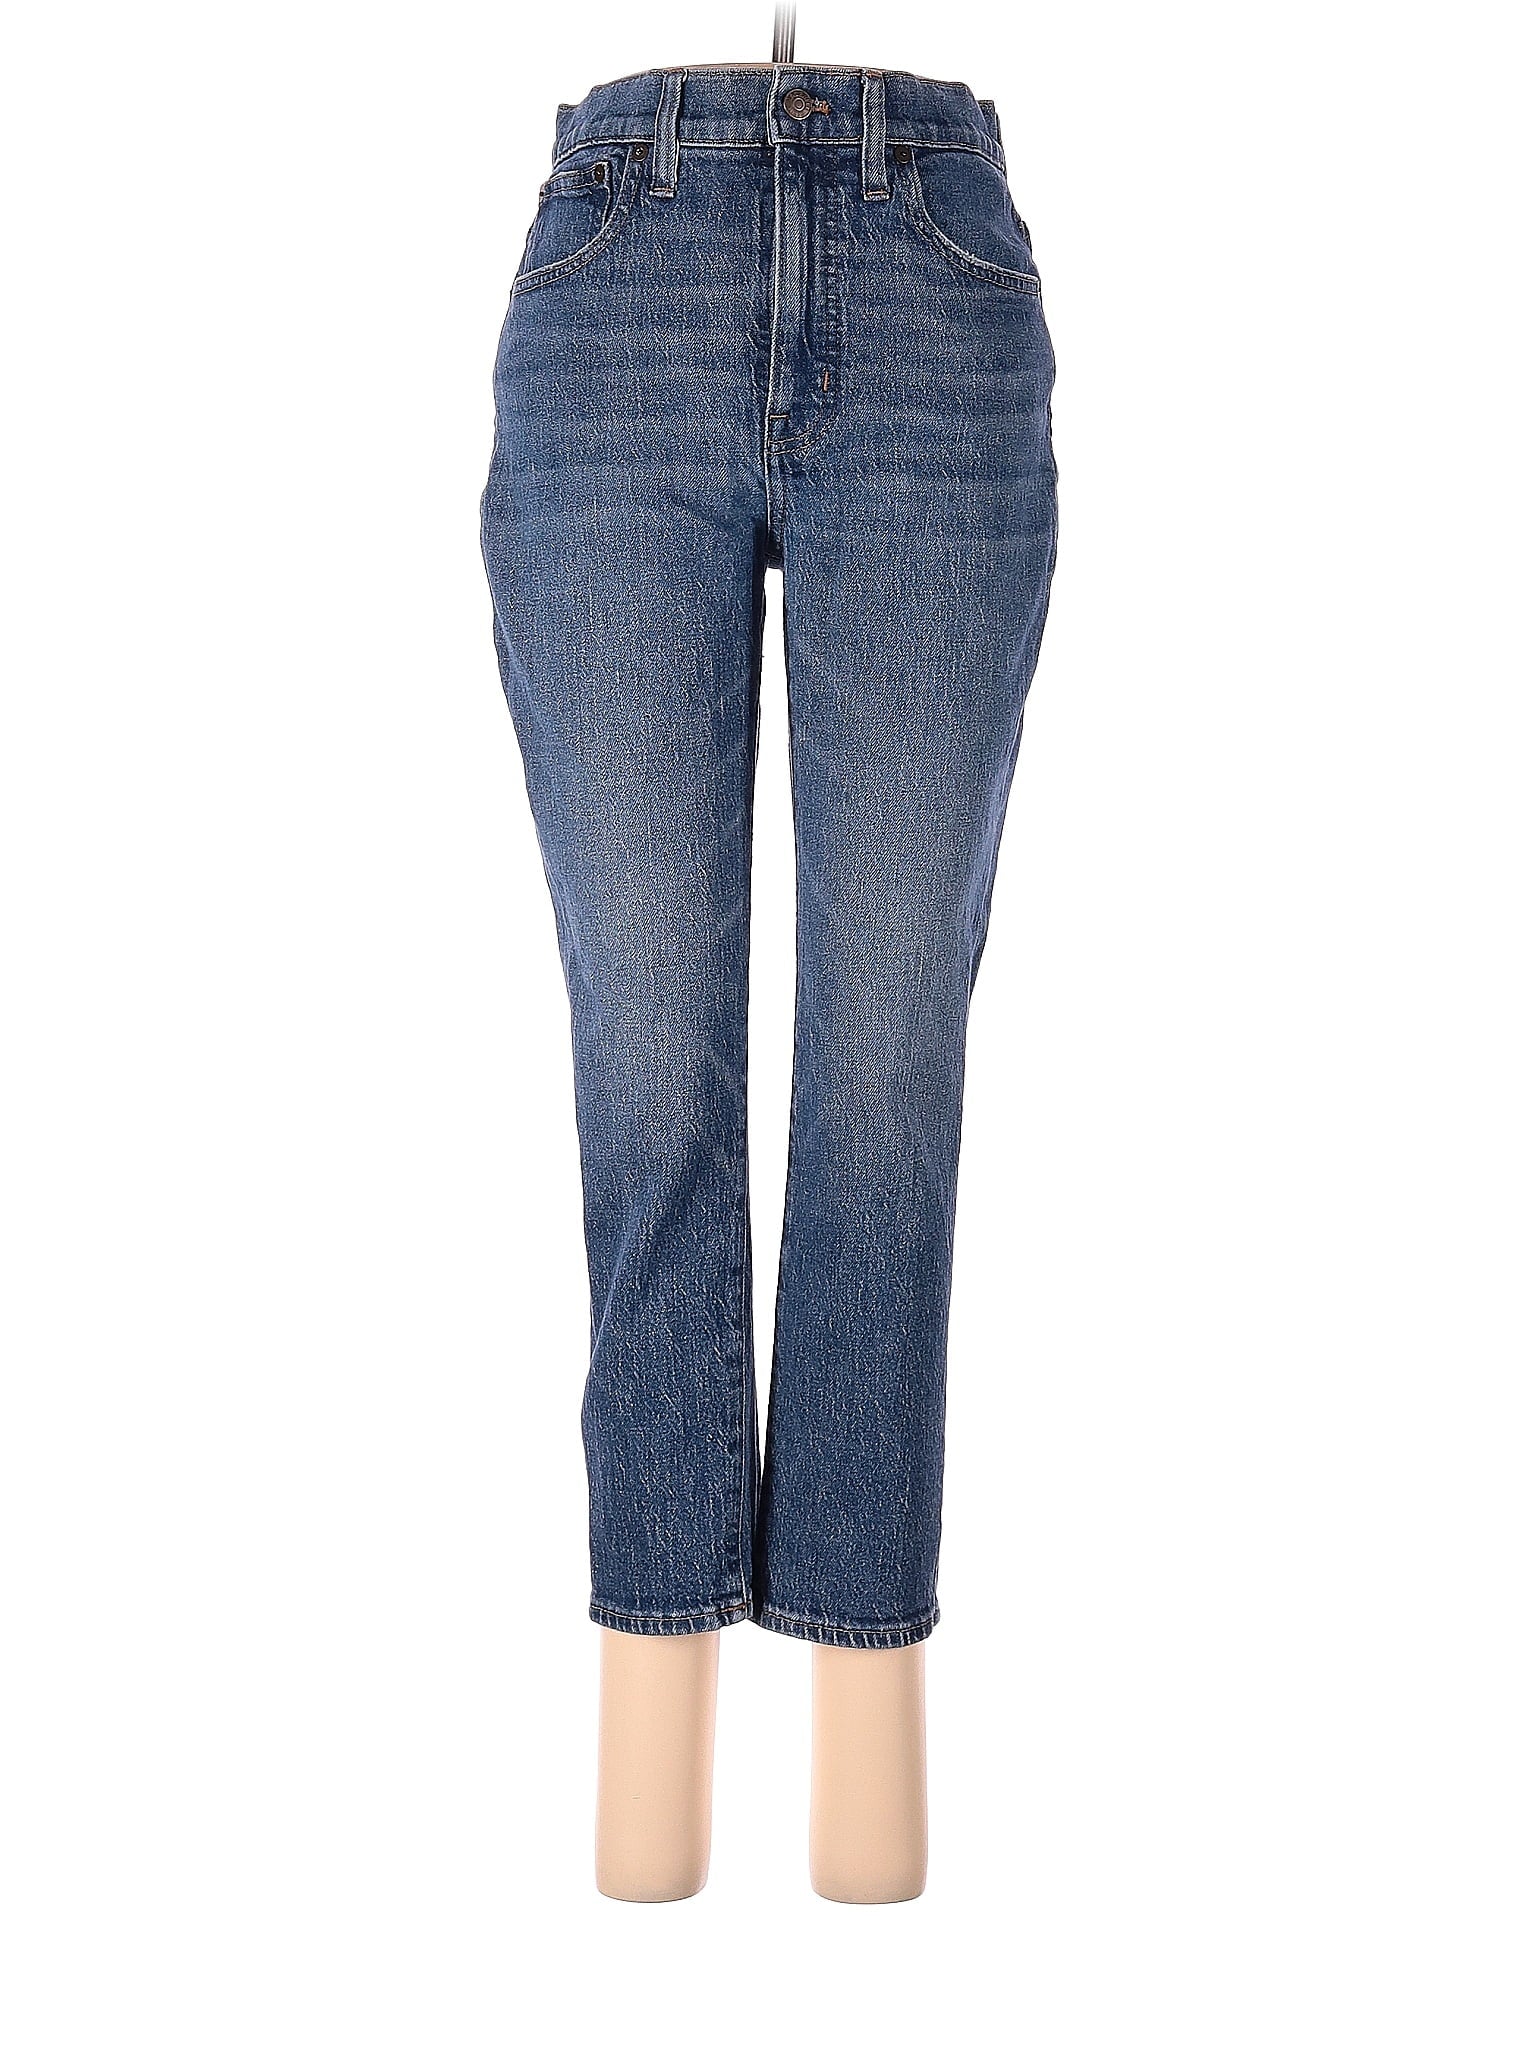 High-Rise Boyjeans Jeans in Medium Wash waist size - 27 P